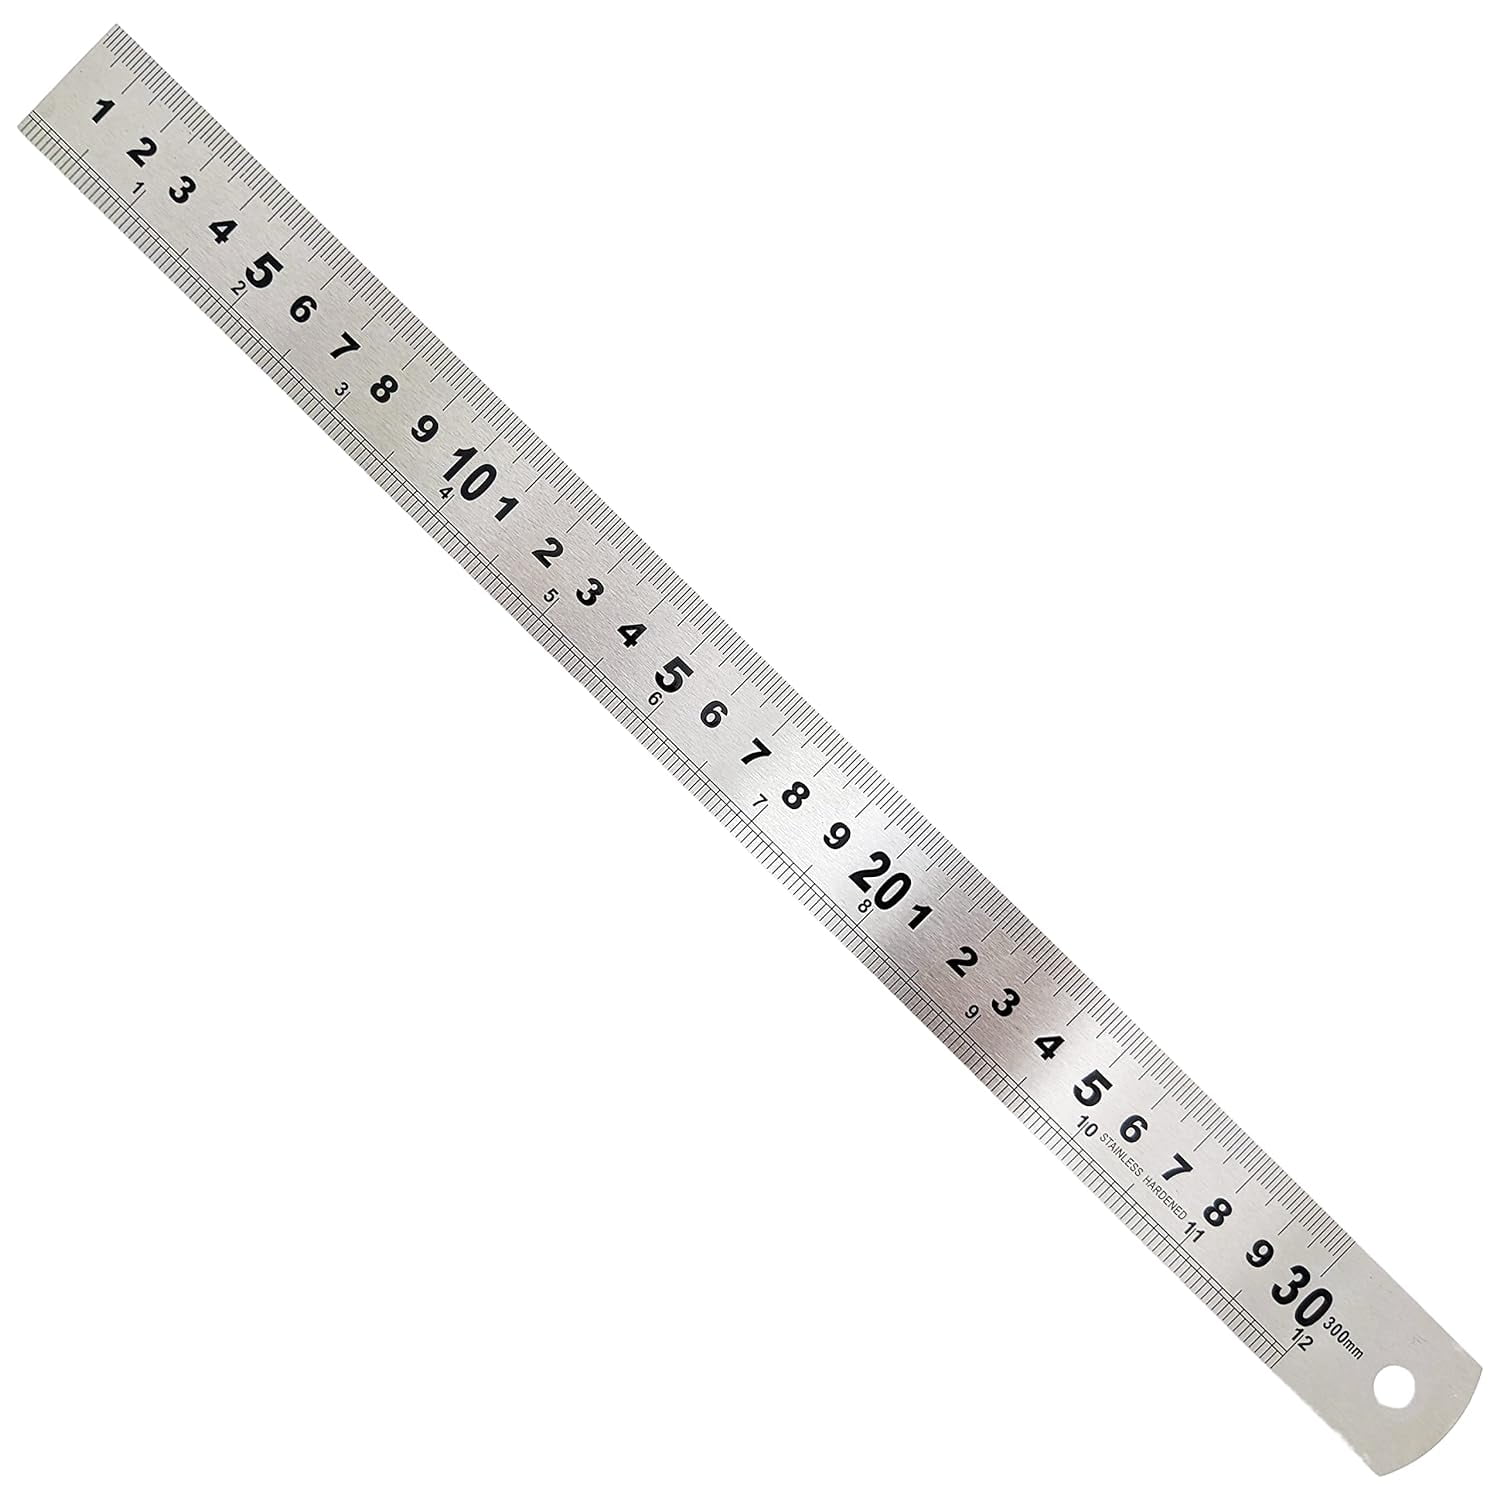  Stainless Steel Ruler Set, Flexible Metal Ruler 12